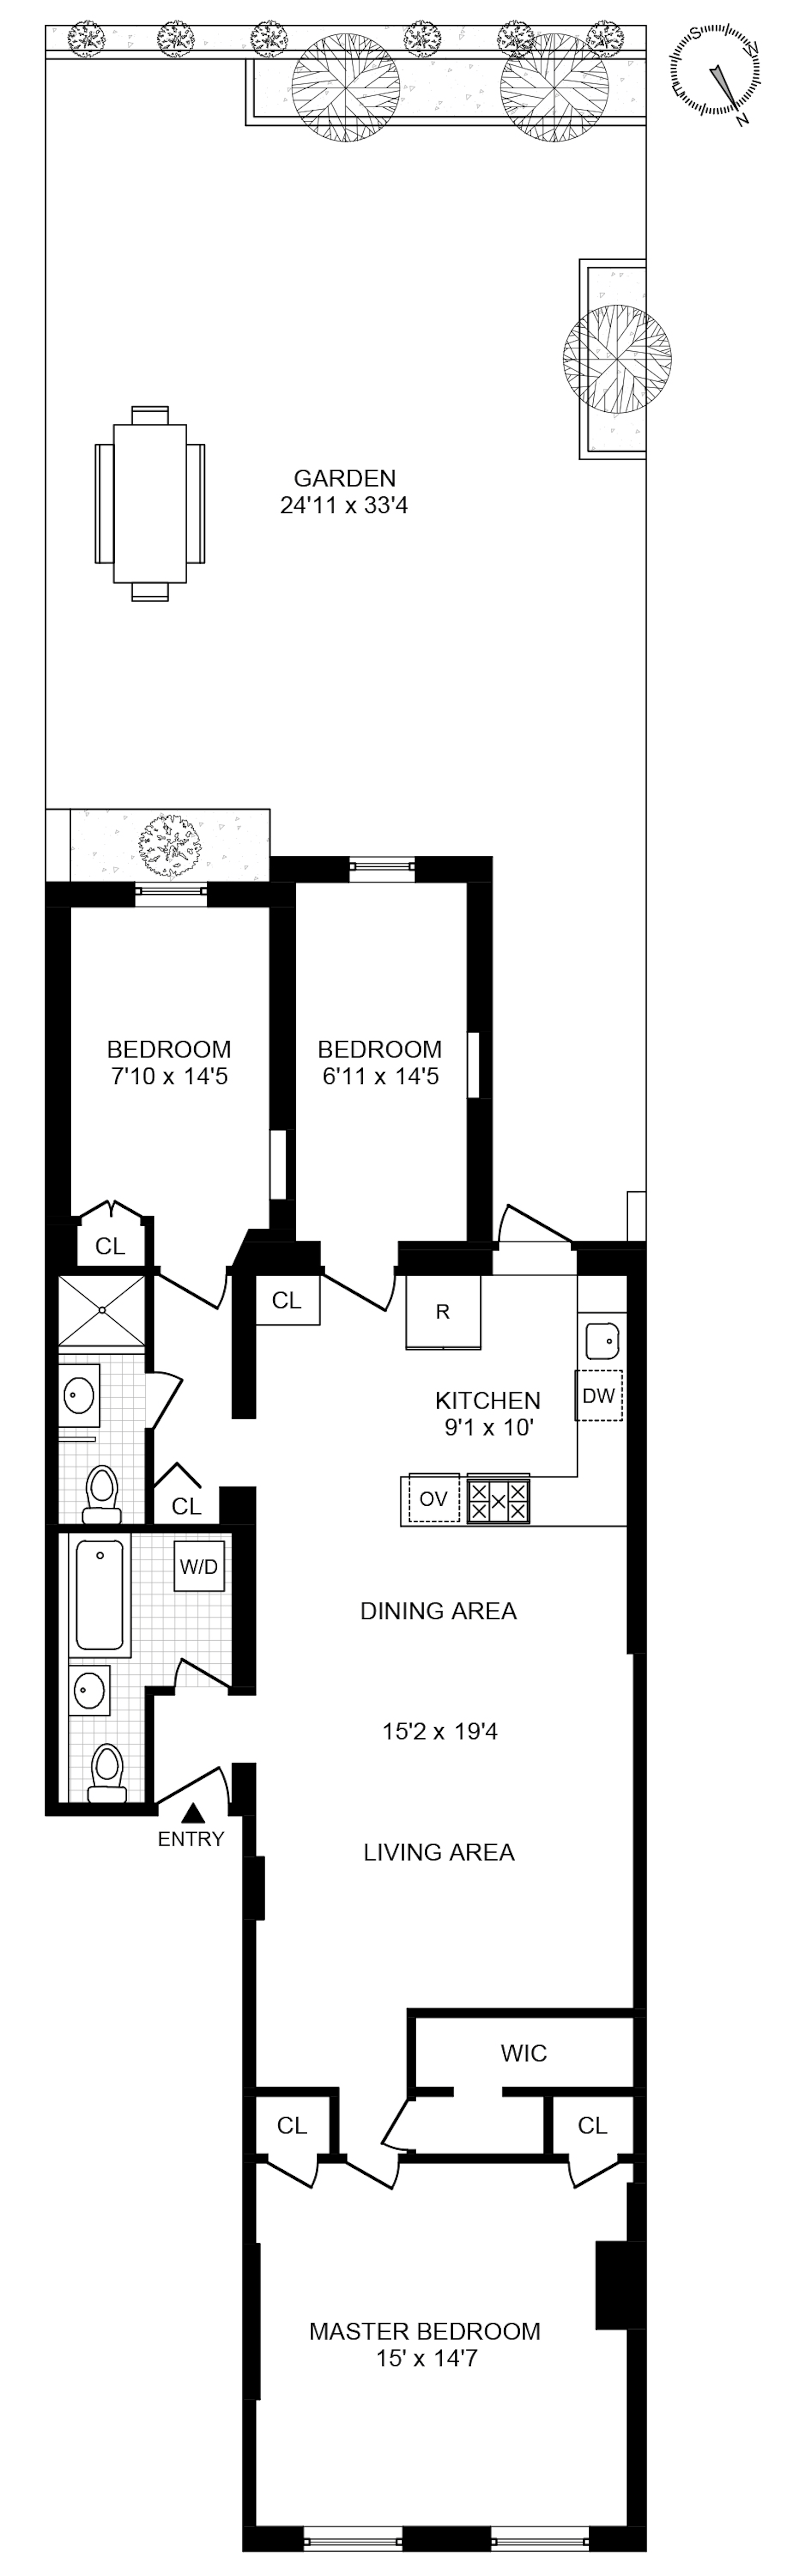 Floorplan for 452 West 23rd Street, G